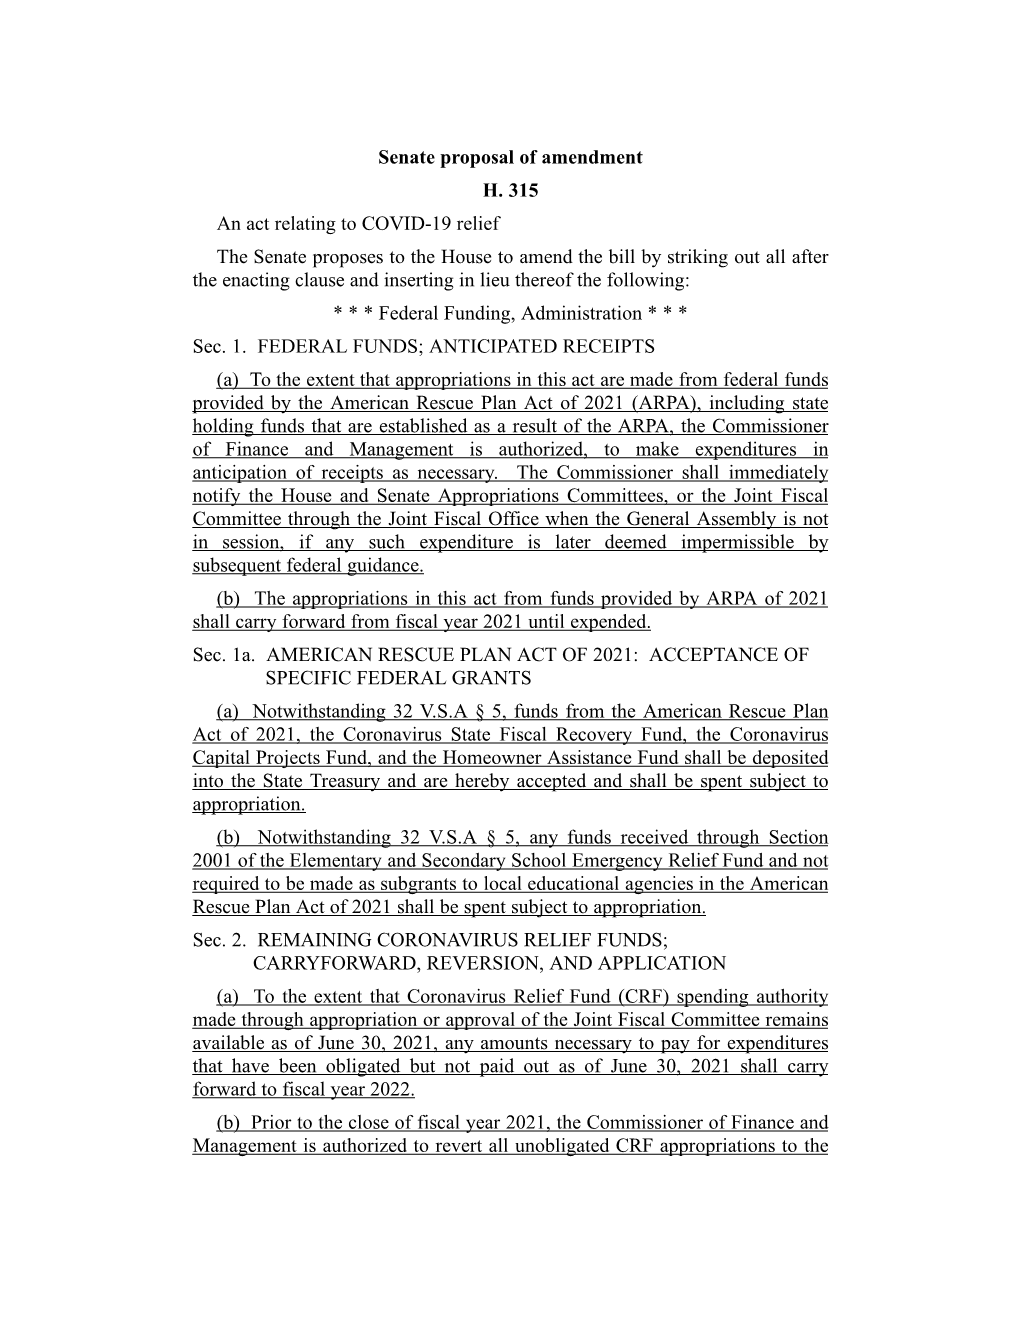 Senate Proposal of Amendment H. 315 an Act Relating to COVID-19